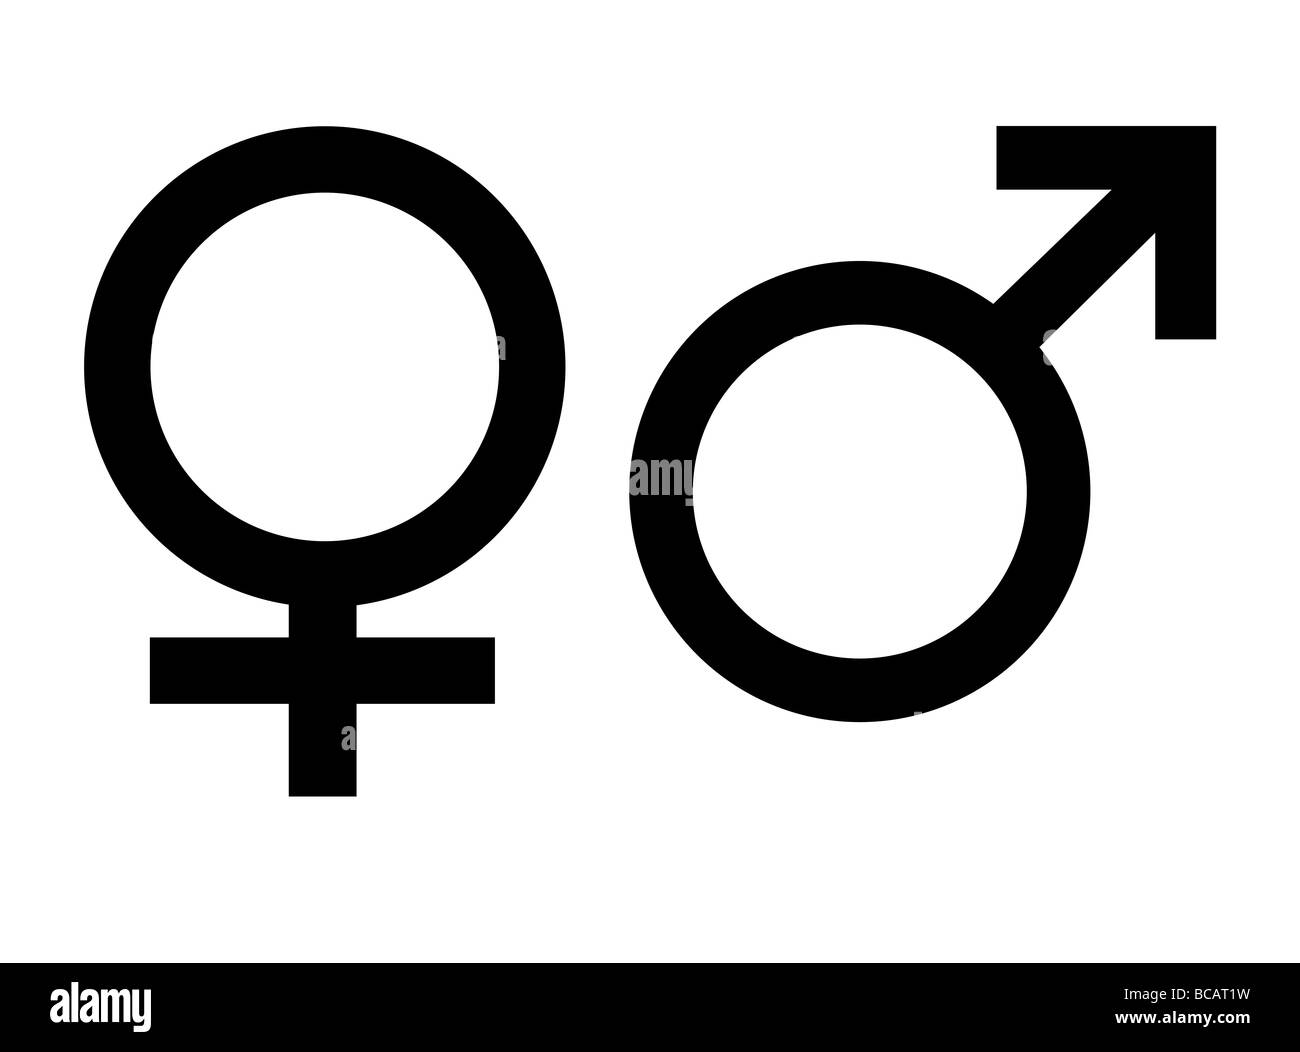 Male and female gender symbols isolated on white background Stock Photo